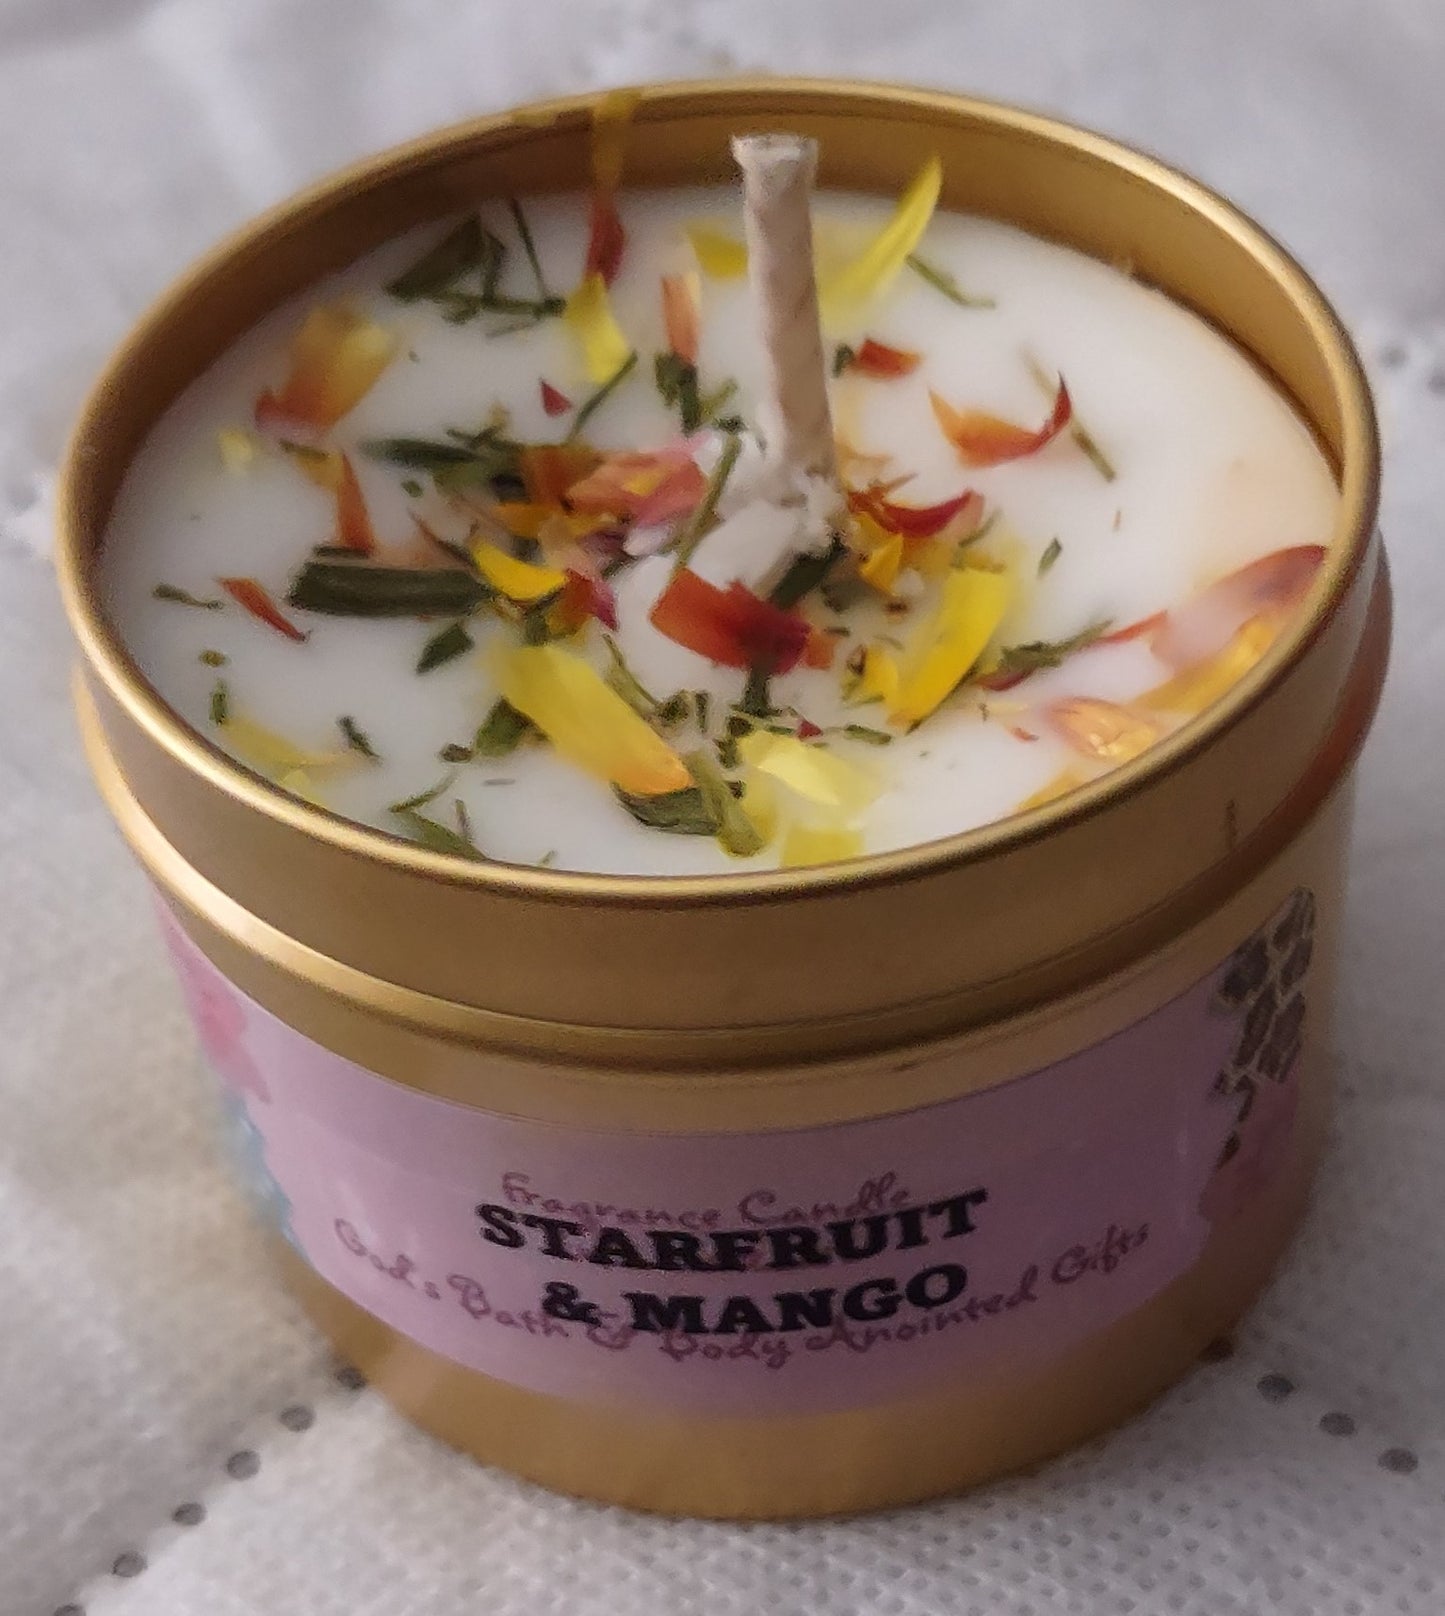 Starfruit & Mango - 4oz metallic tin can with lid